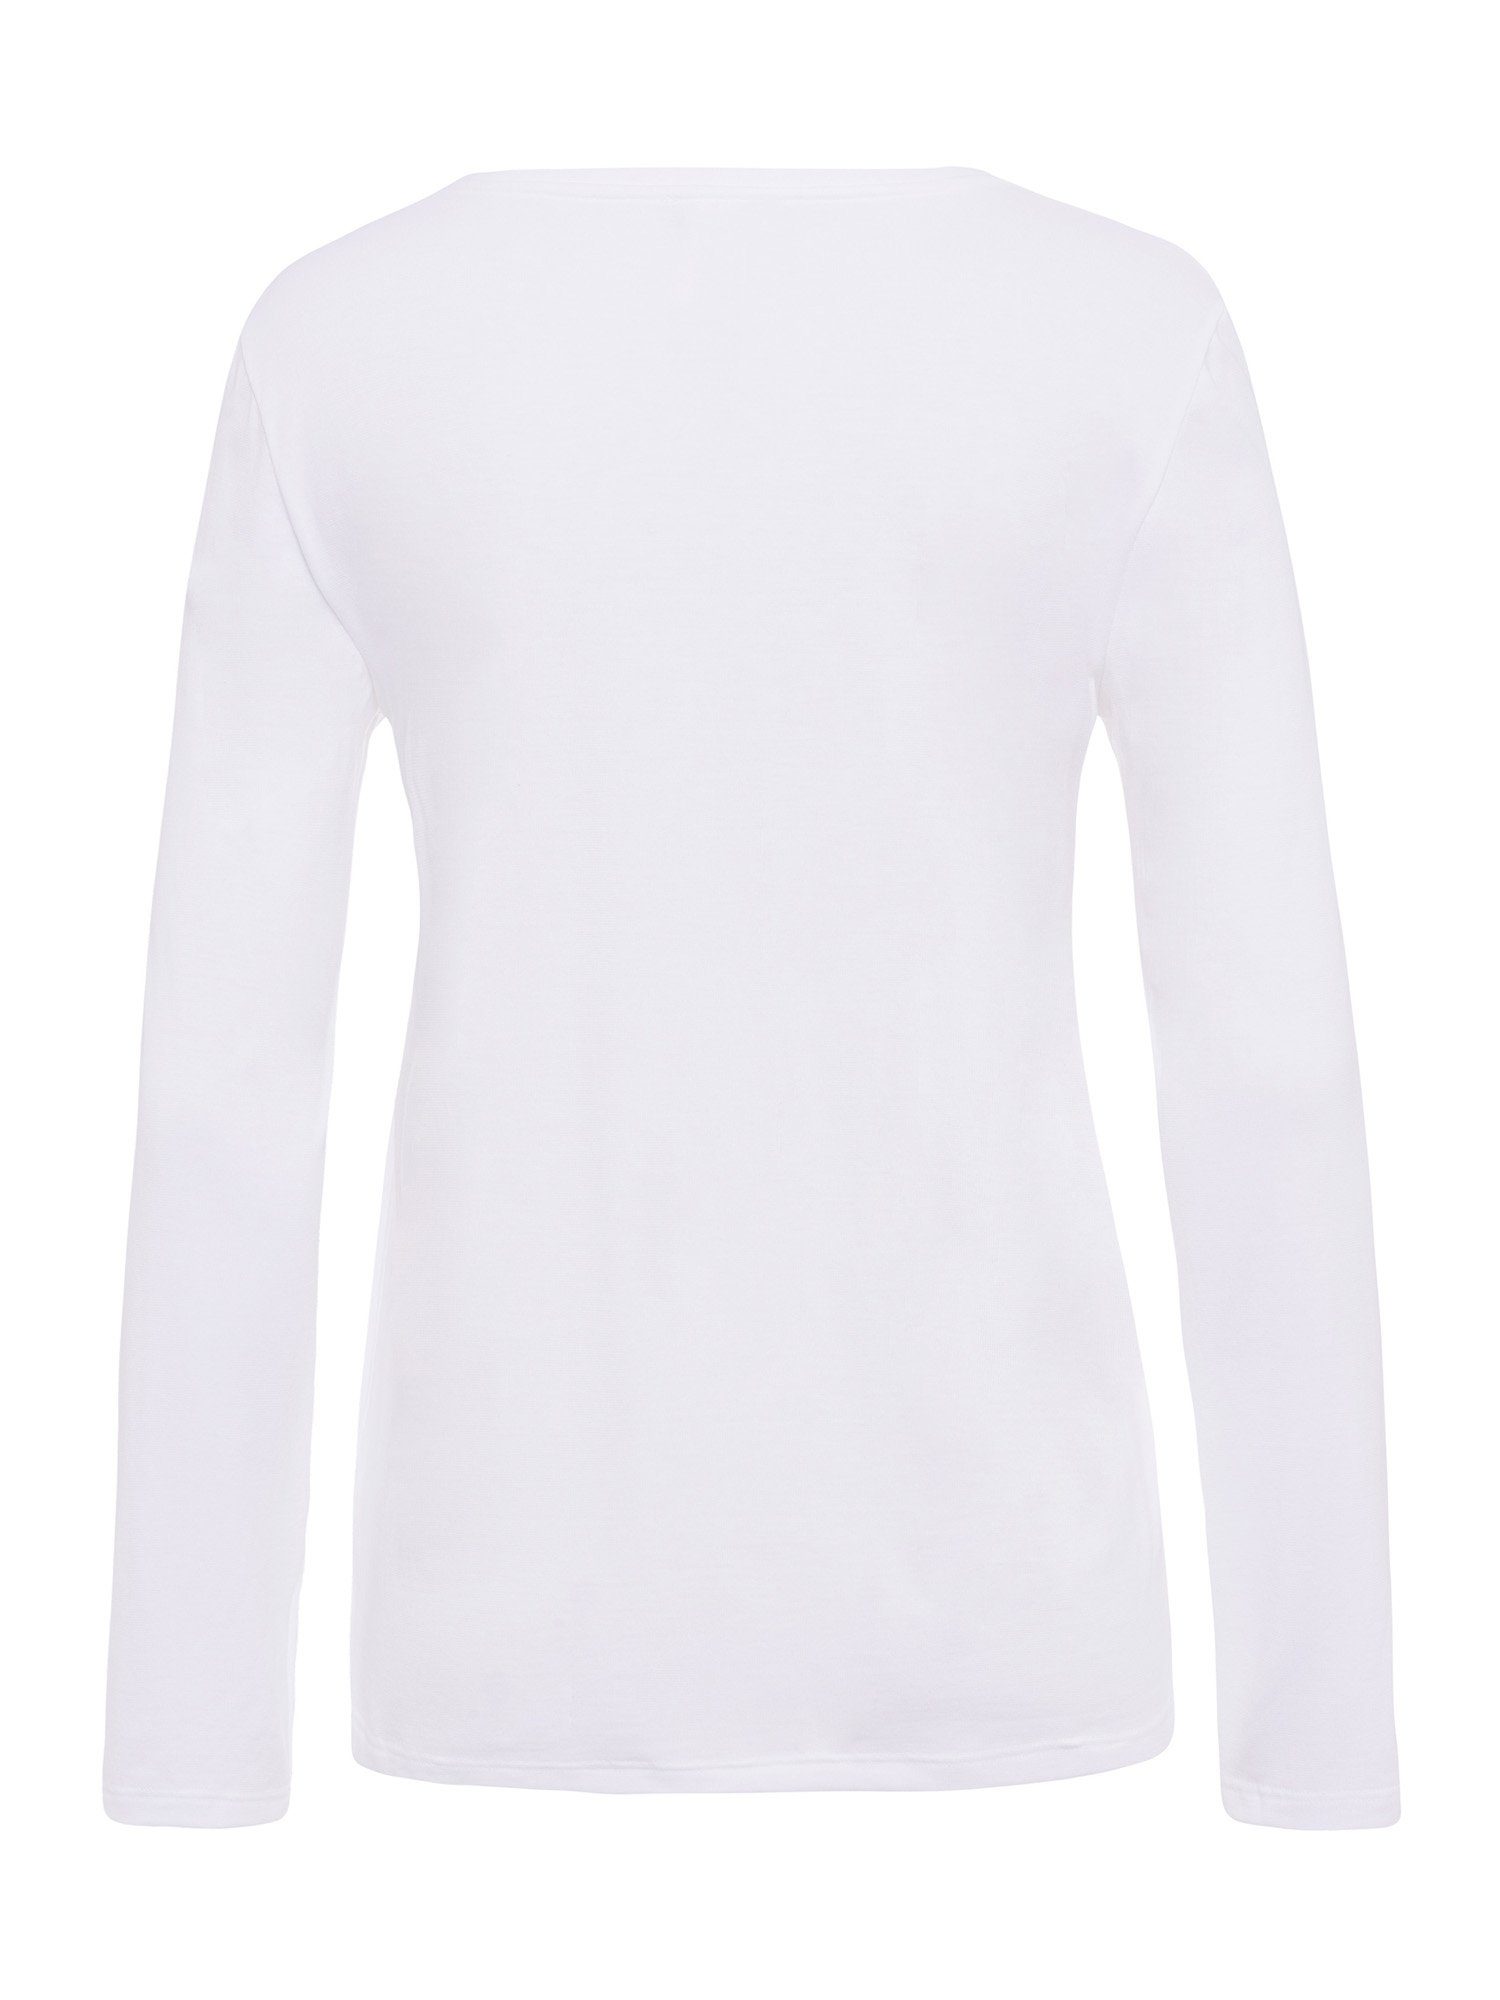 Sleep shirt Lounge white unterhemd Hanro Pyjamaoberteil langarm &